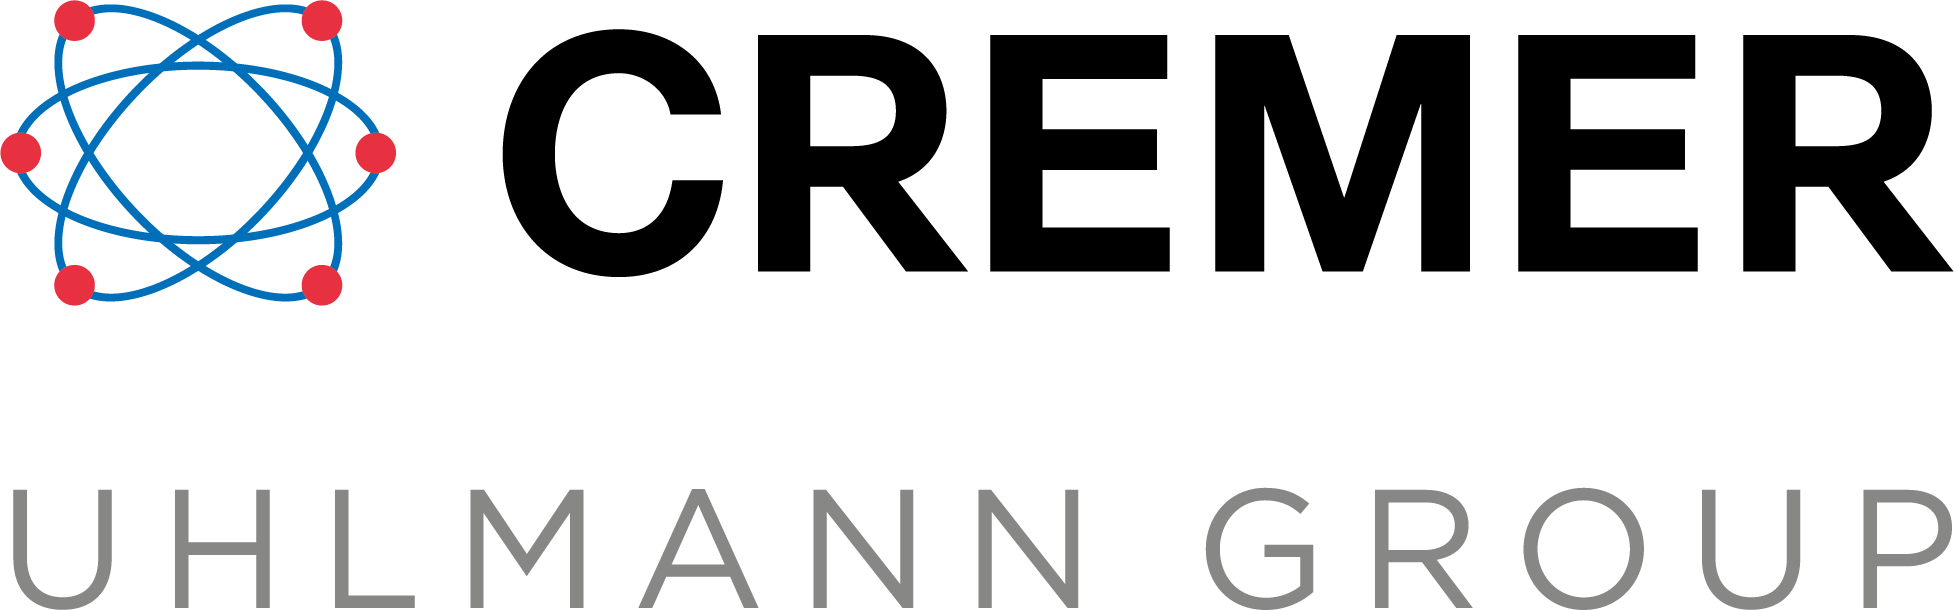 Logo Cremer Uhlmann Group